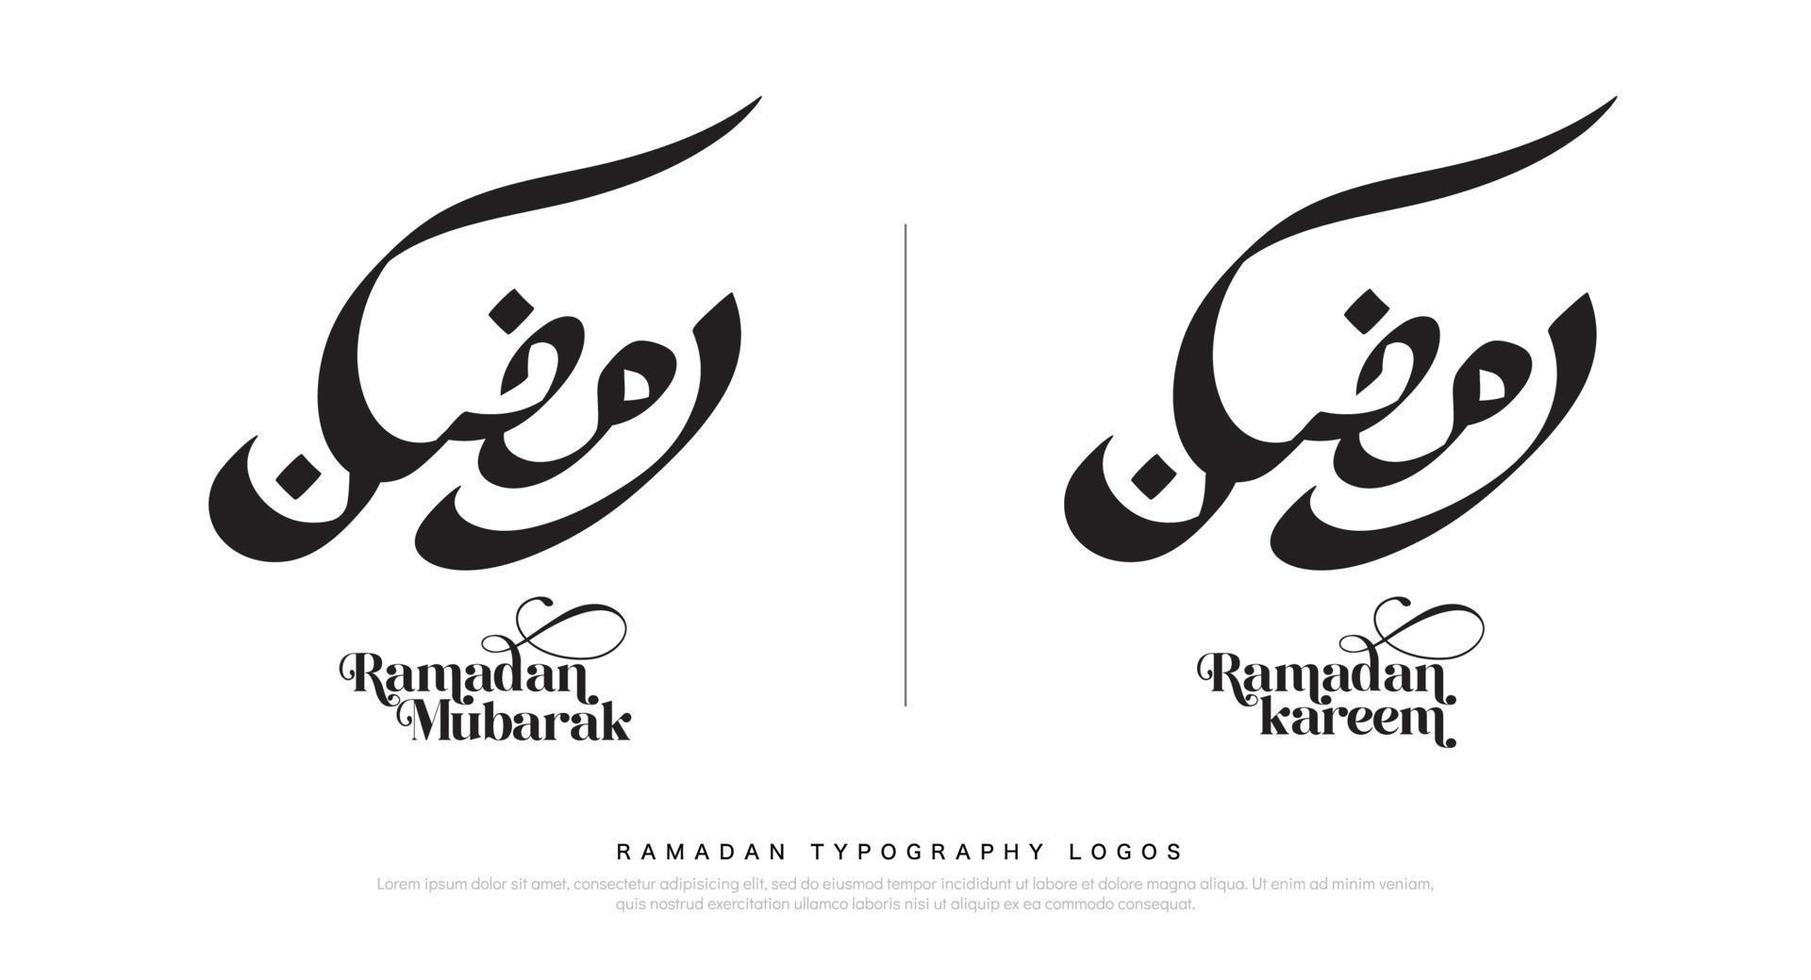 logos ramadan 2022 salutation avec calligraphie lettrage ramadan moubarak et logo ramadan kareem. illustration vectorielle vecteur